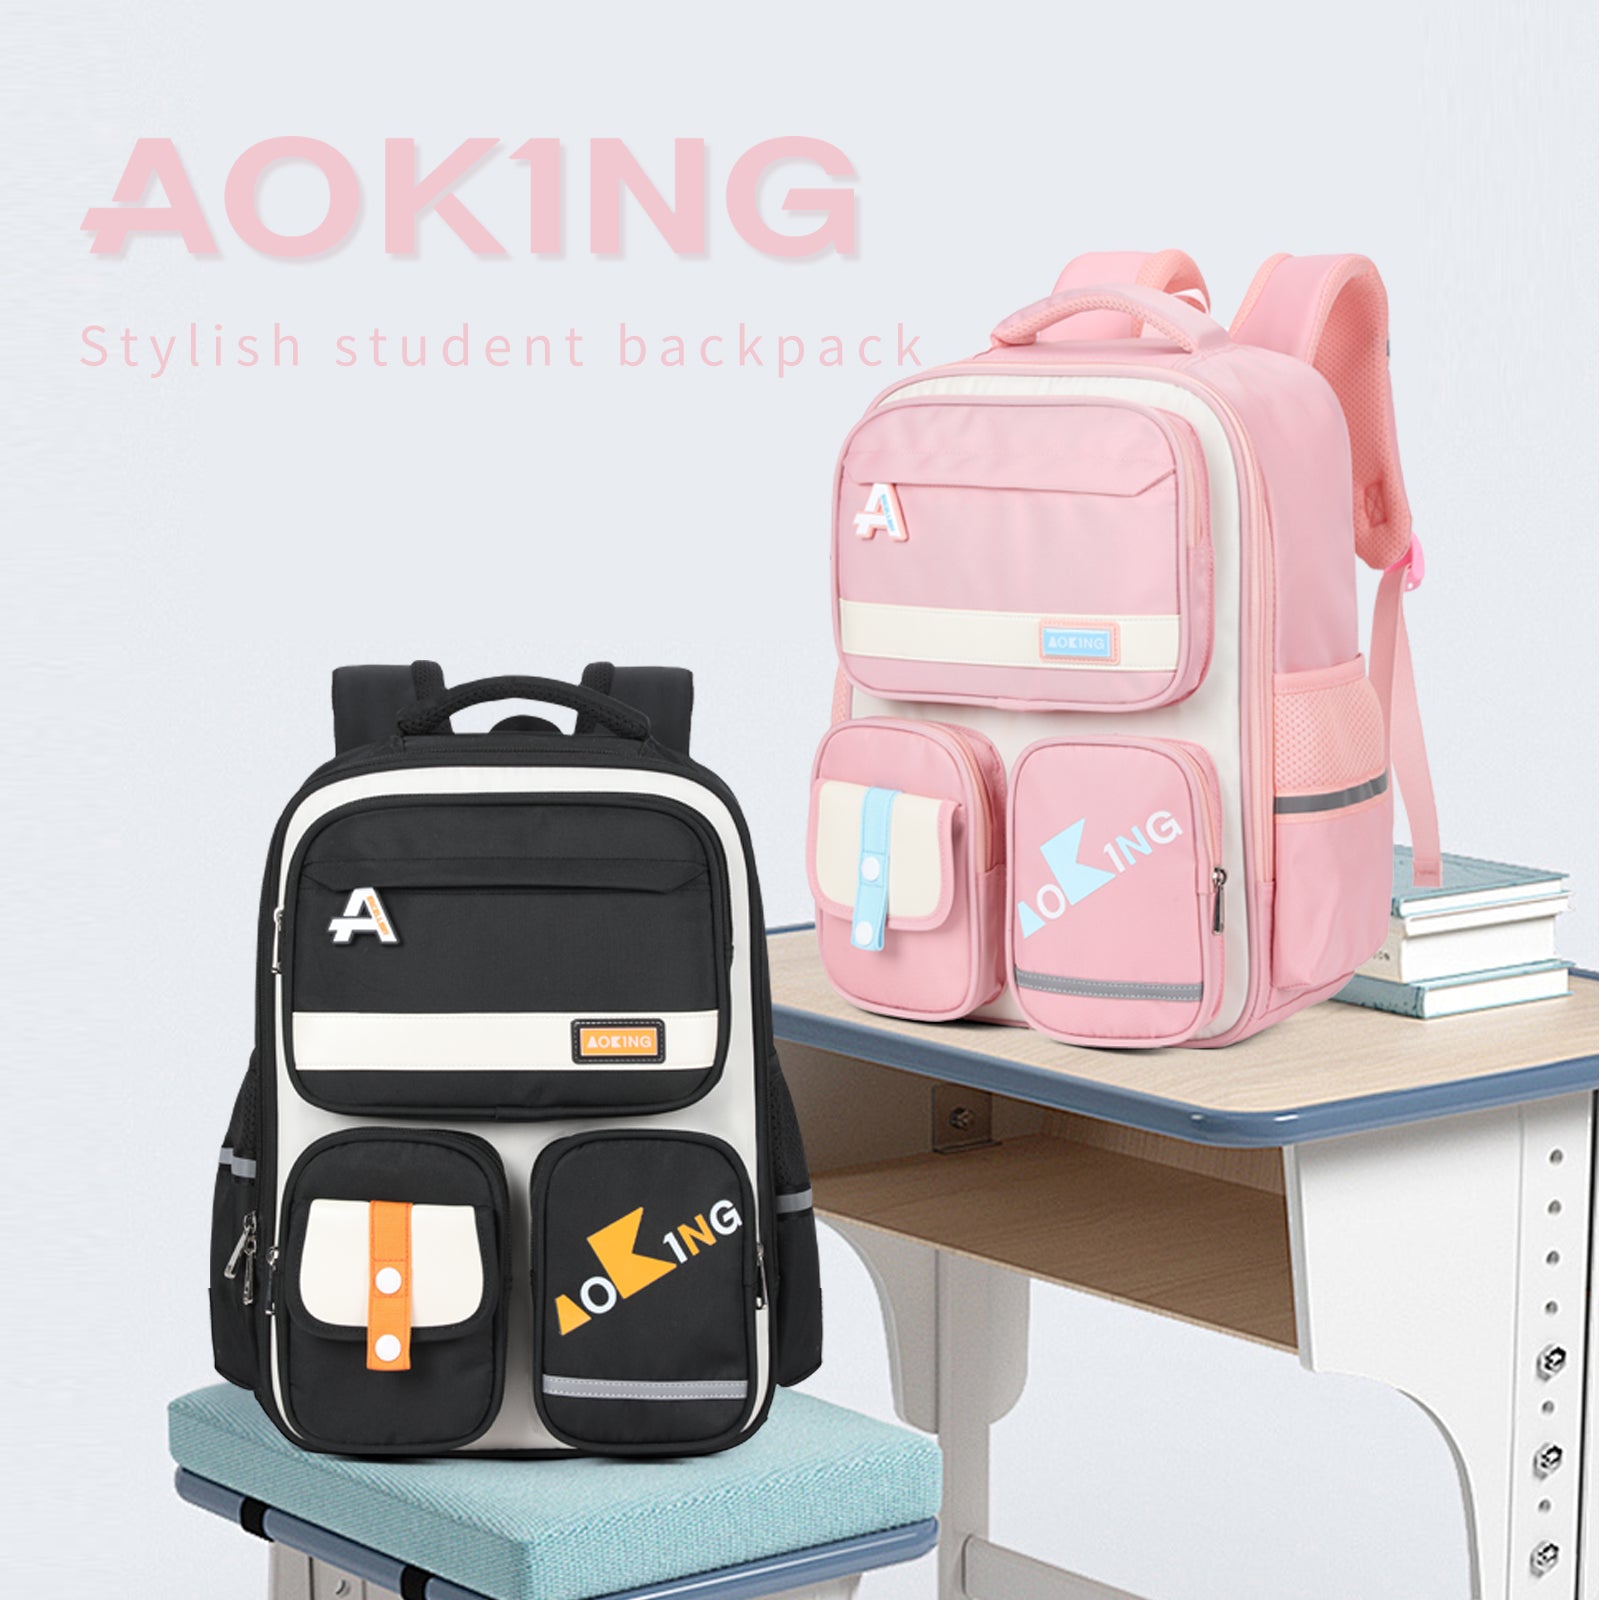 Aoking Casual Lightweight School Backpack BN3032